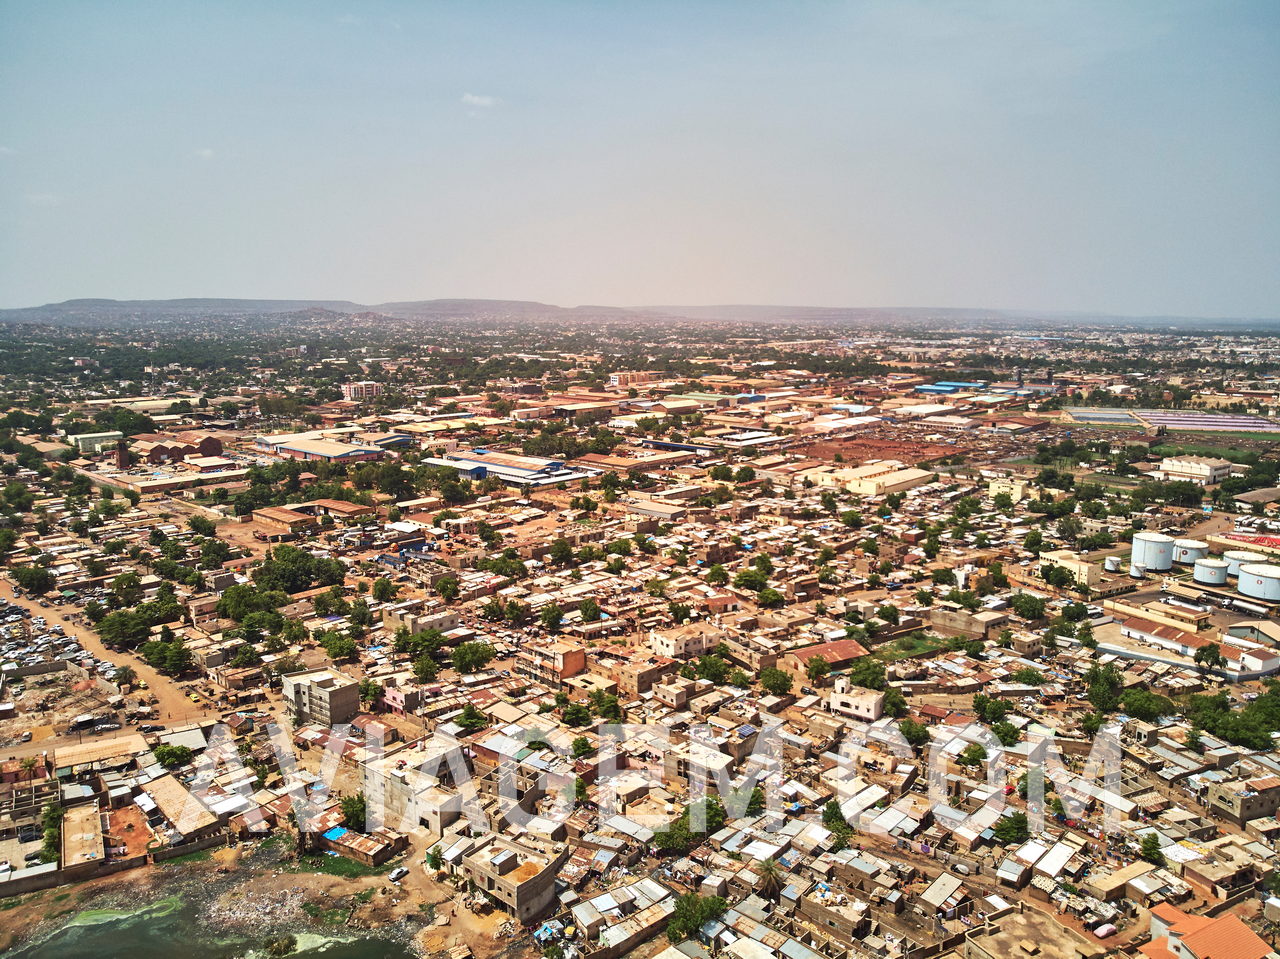 Bamako, capital city of Mali